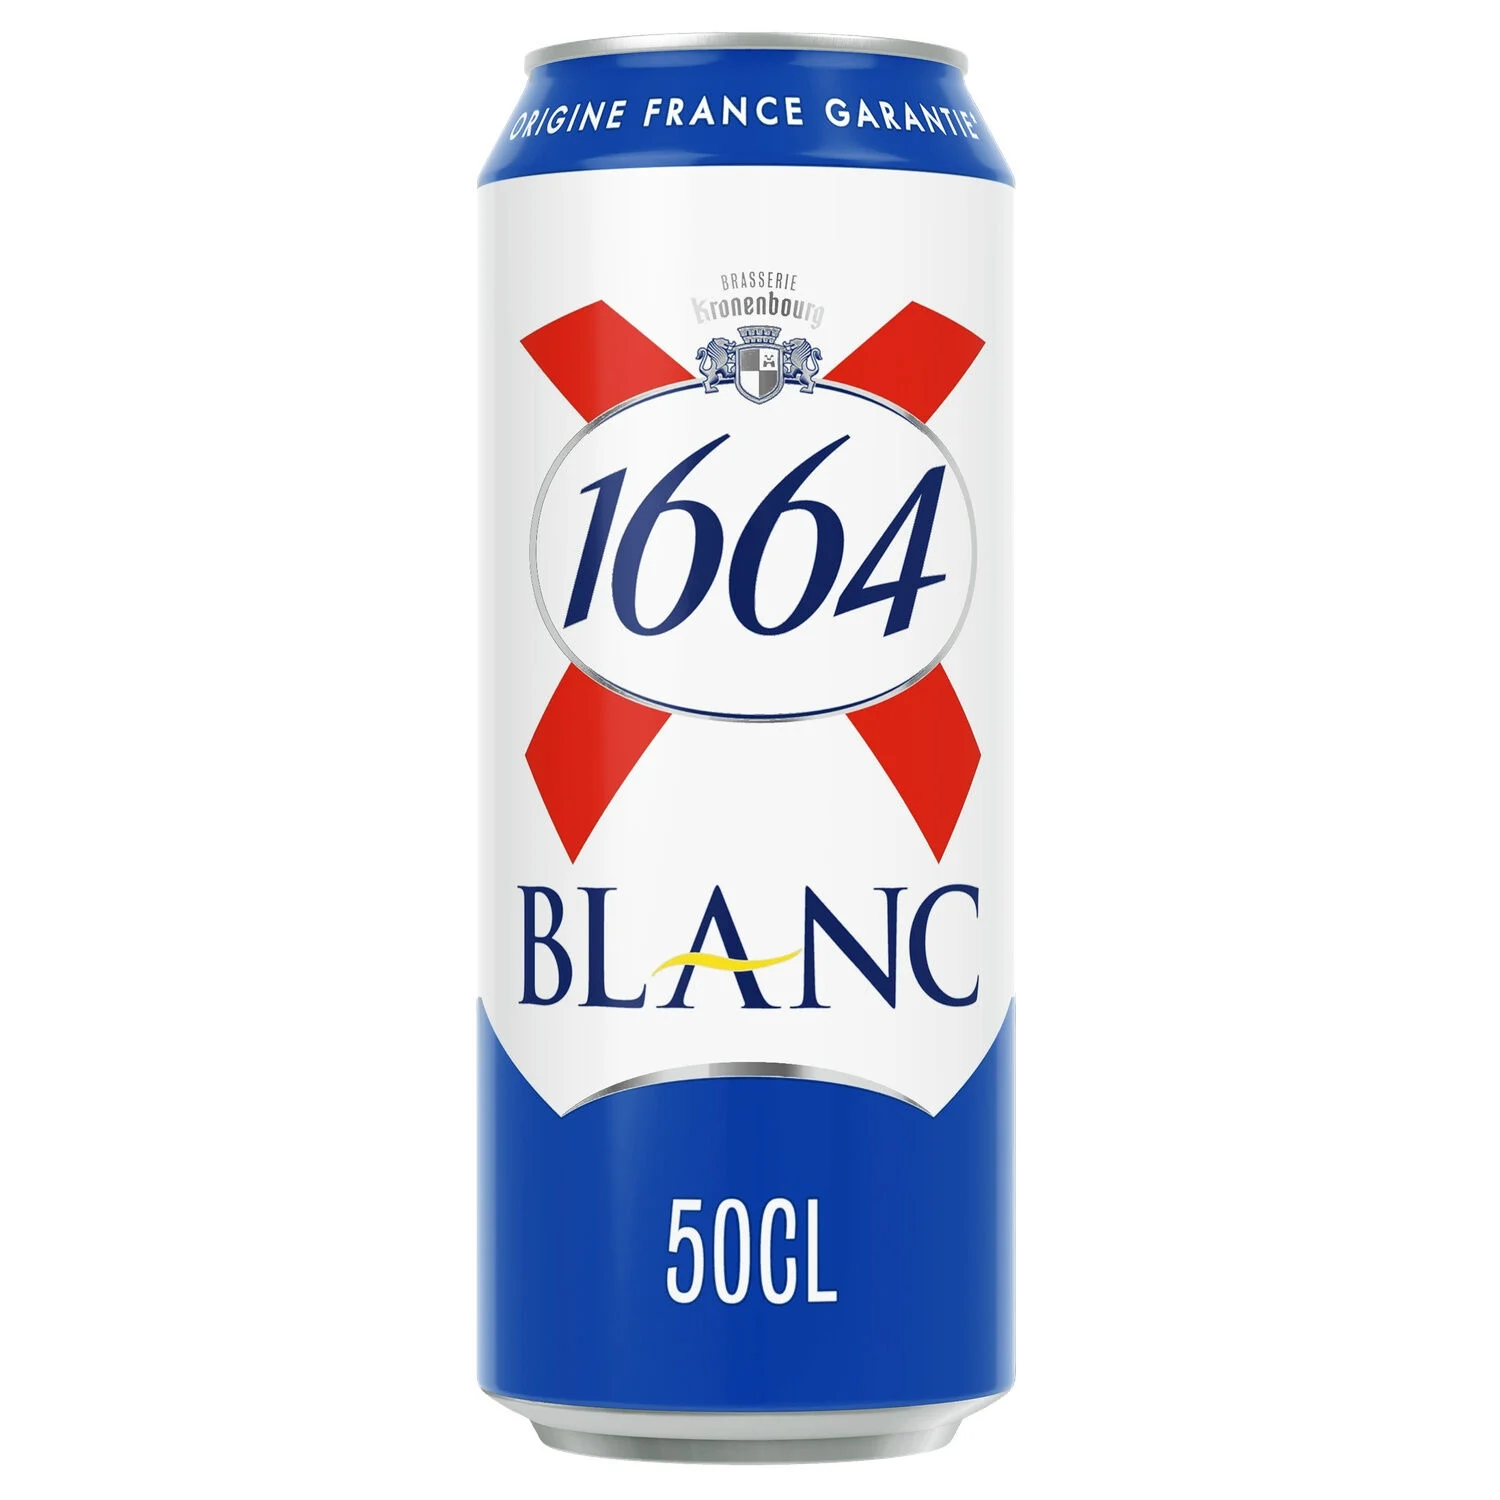 Bte 50cl 1664 Blanc 5